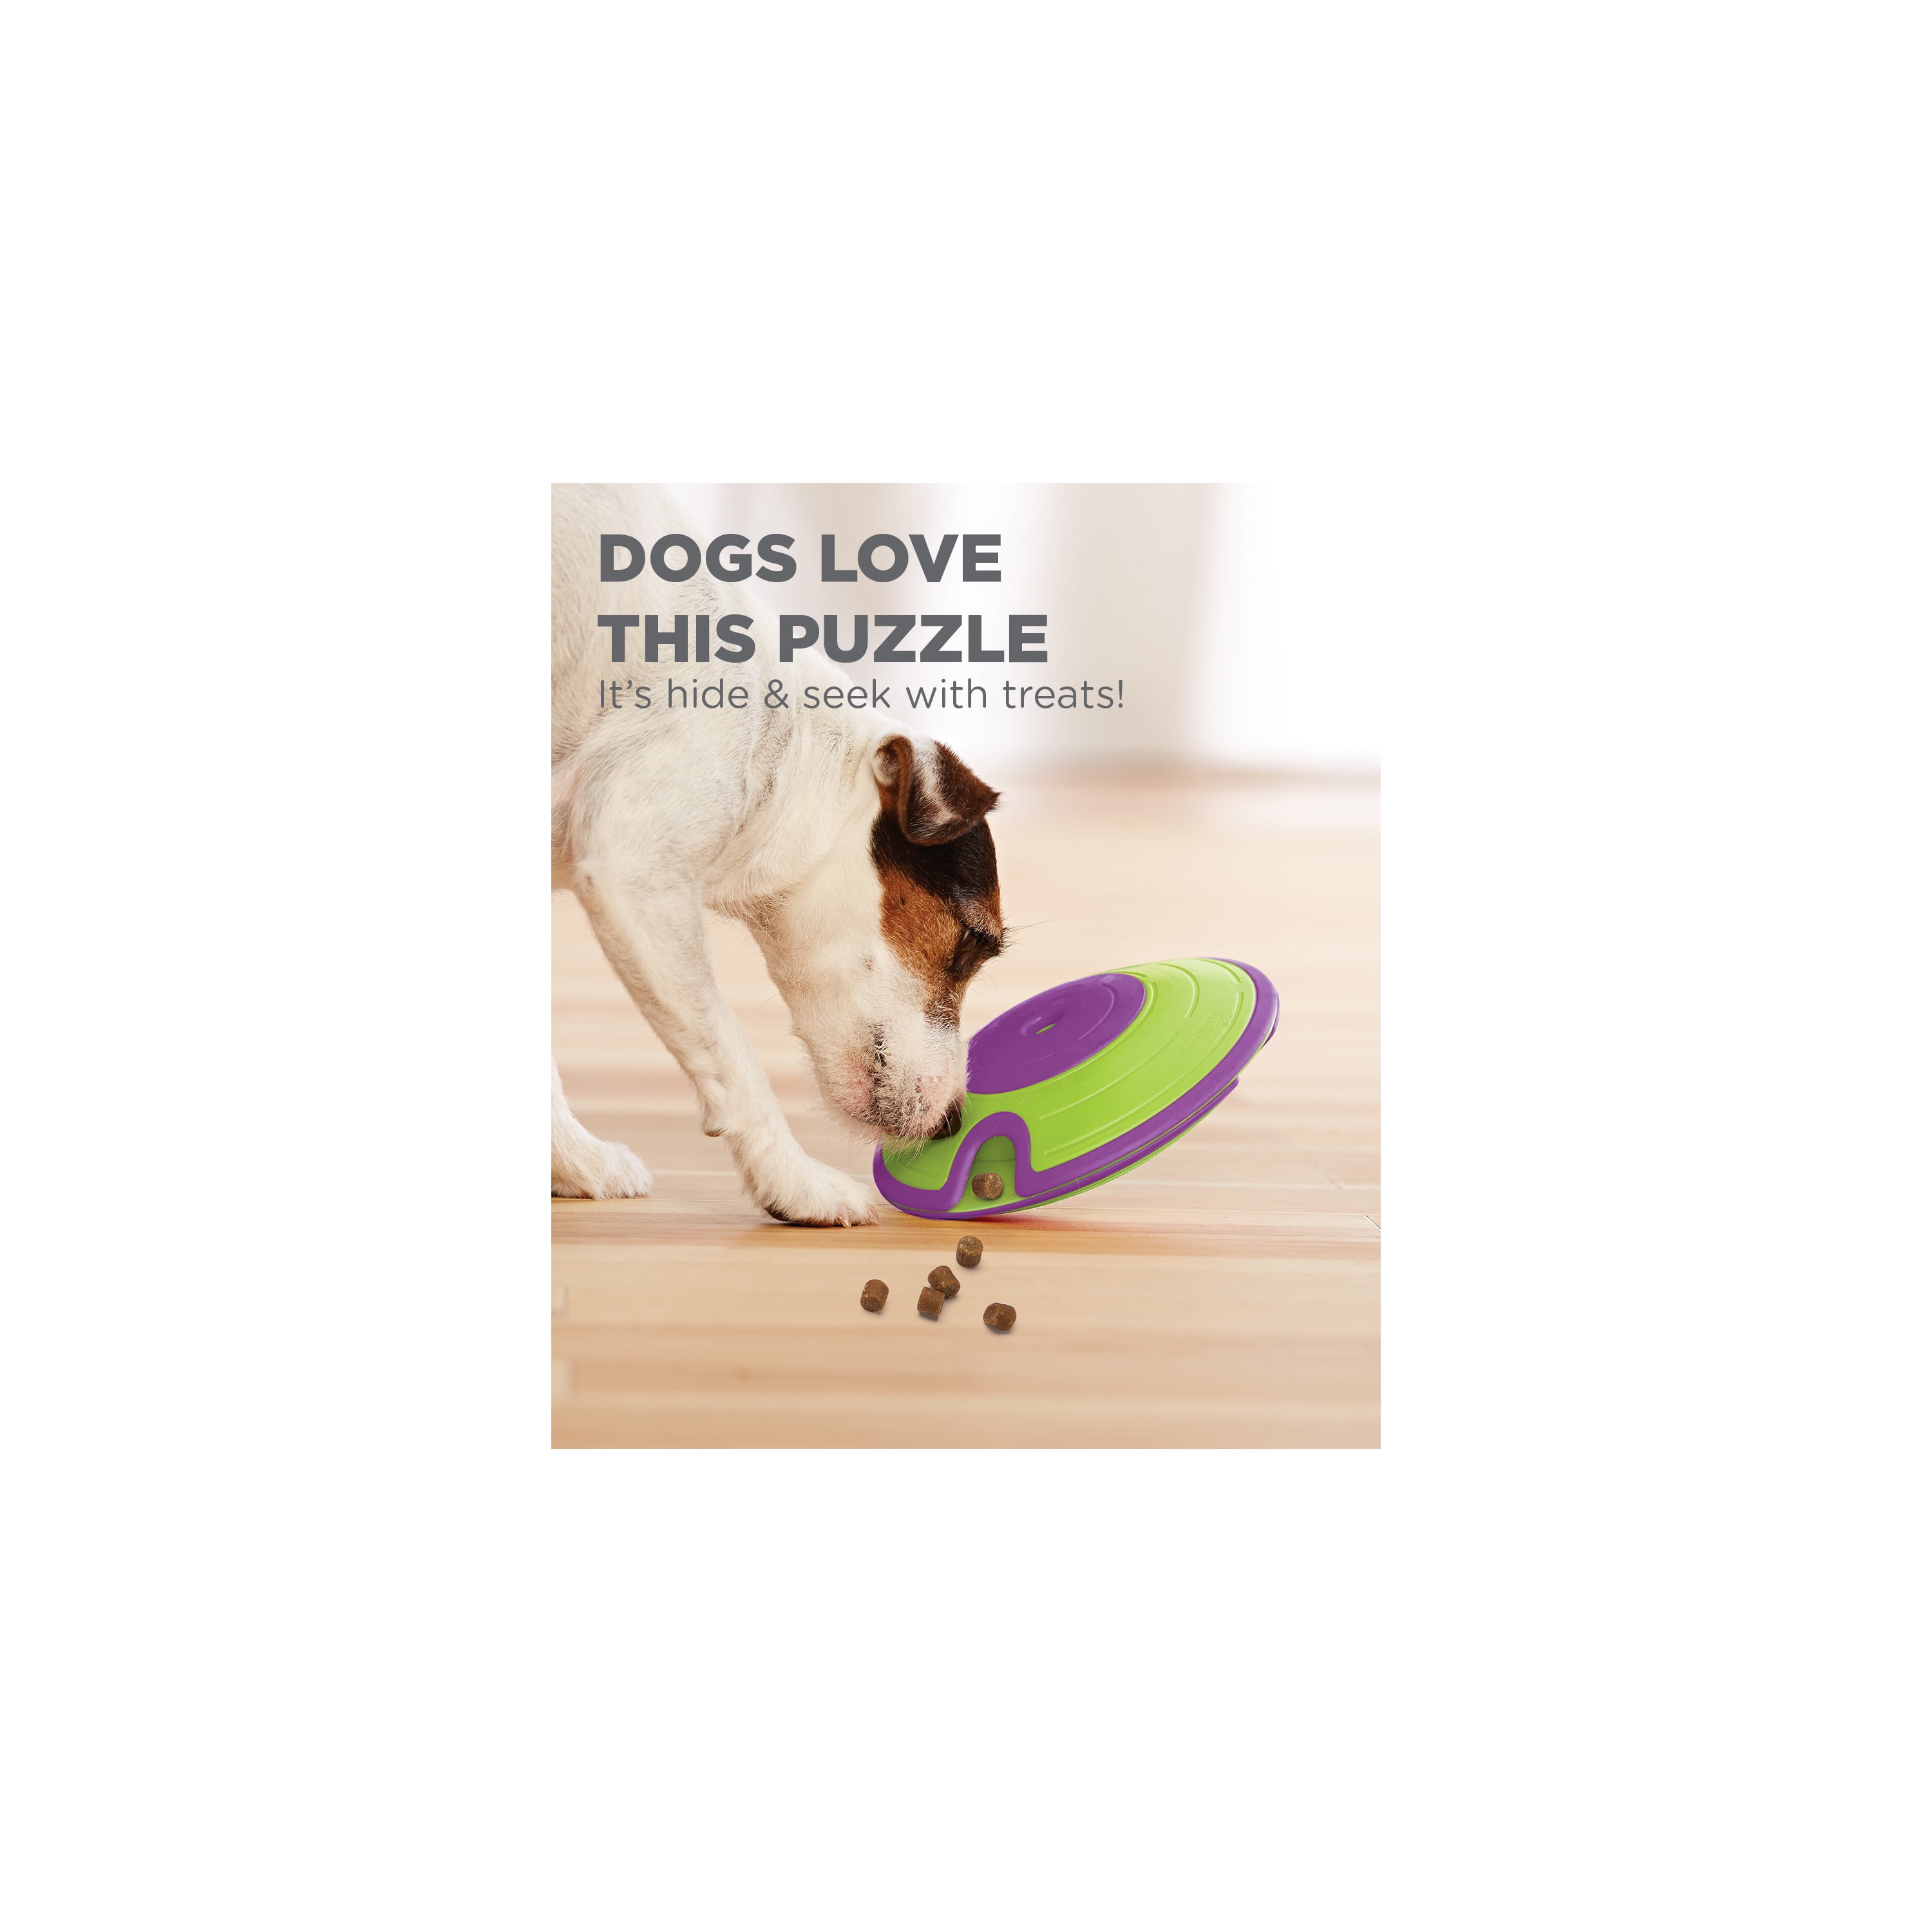 dog mazes: mazes and puzzles dog maze dog maz toy animal maze book bulk  maze book children dog maze mat puzzle book sets for adults word search  animal